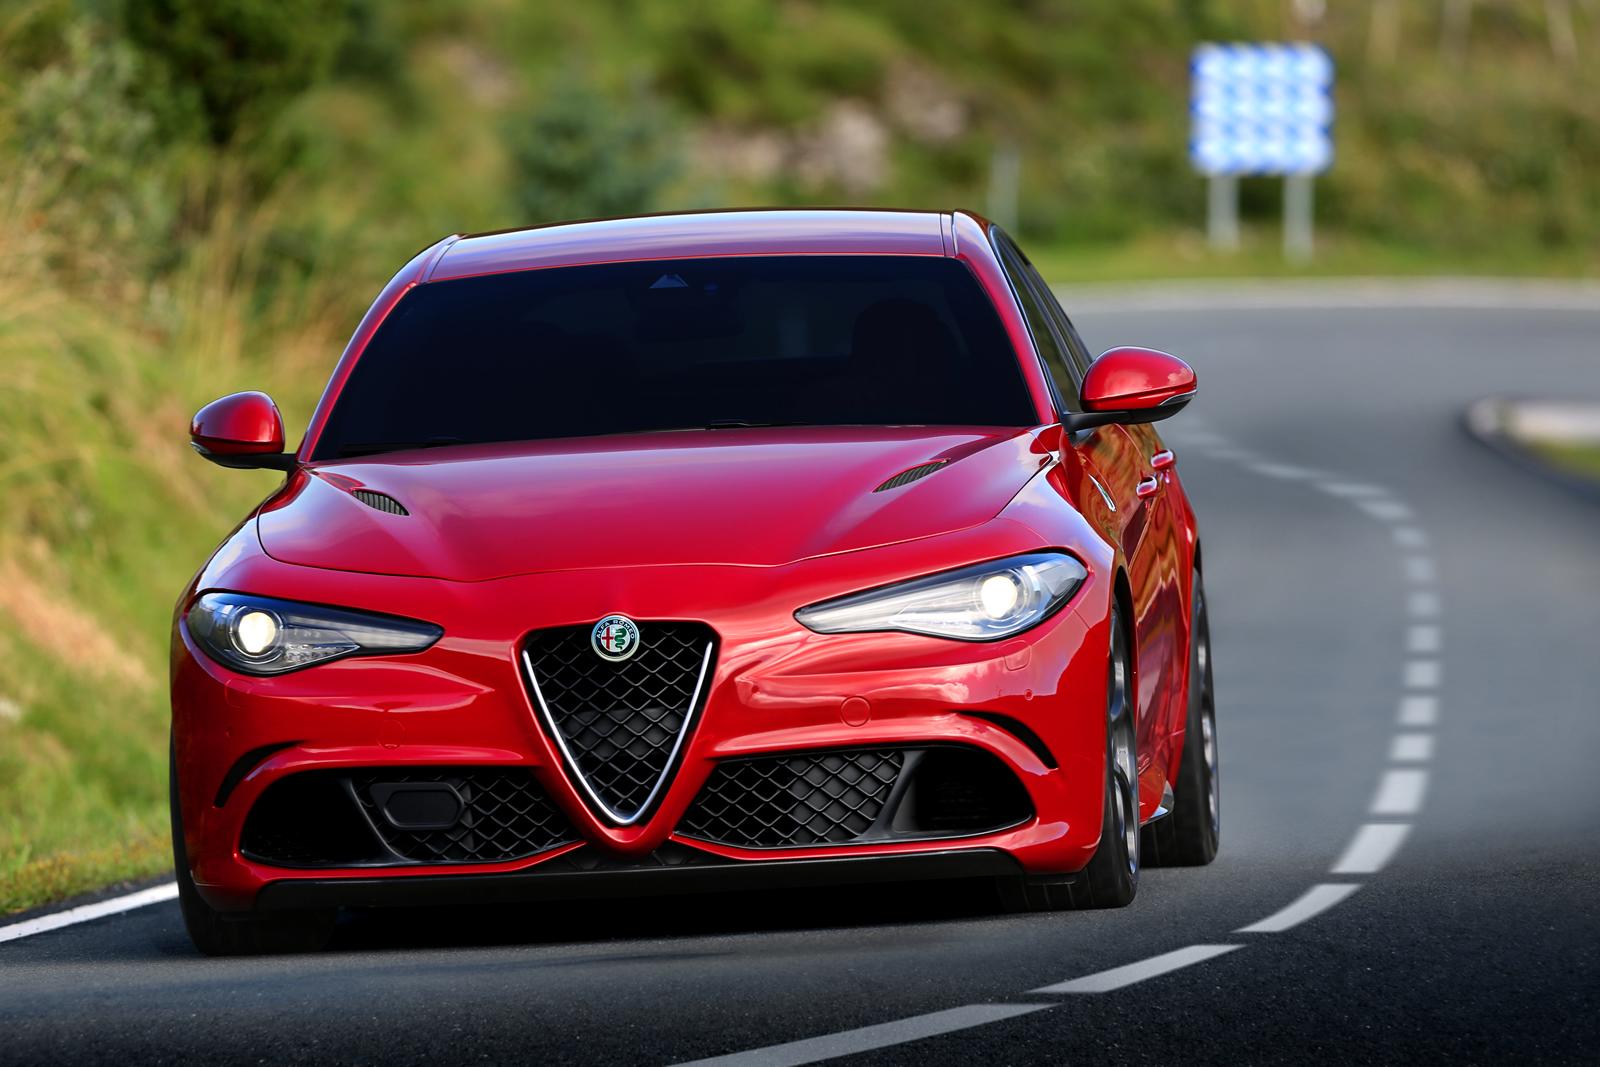 2016-Alfa-Romeo-Giulia-Quadrifoglio-Front-View-Wallpaper.jpg